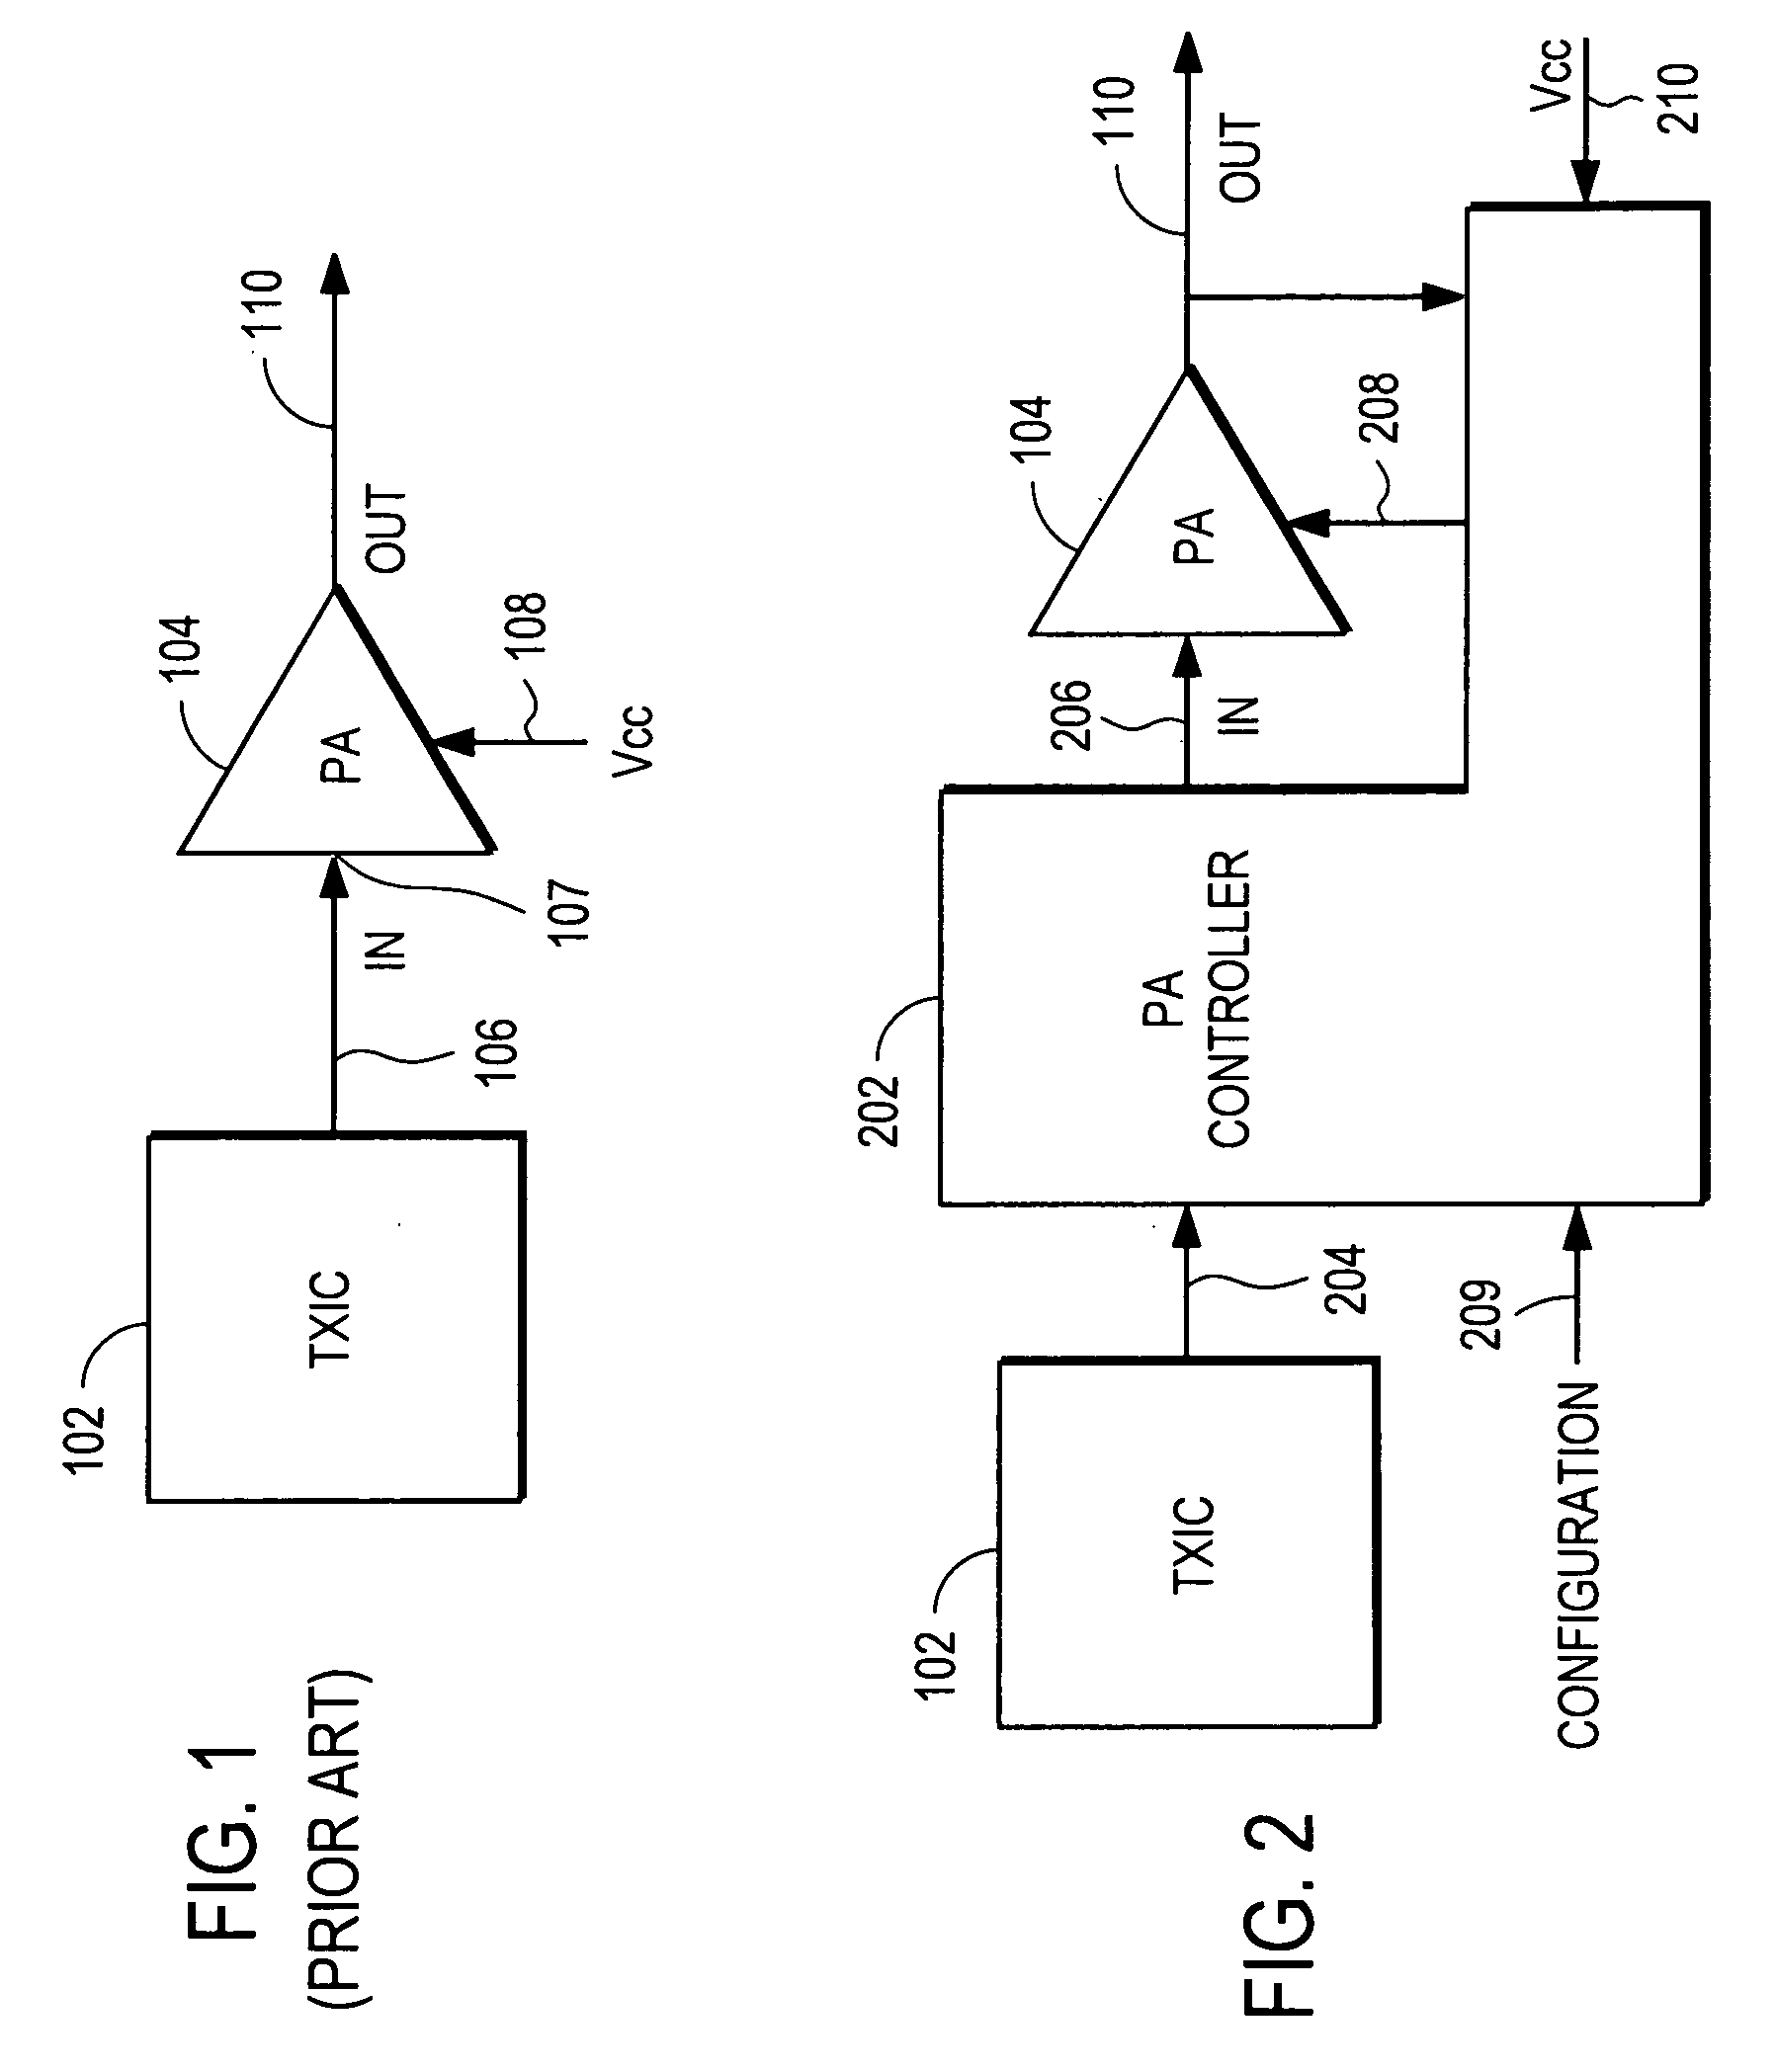 Amplifier compression adjustment circuit